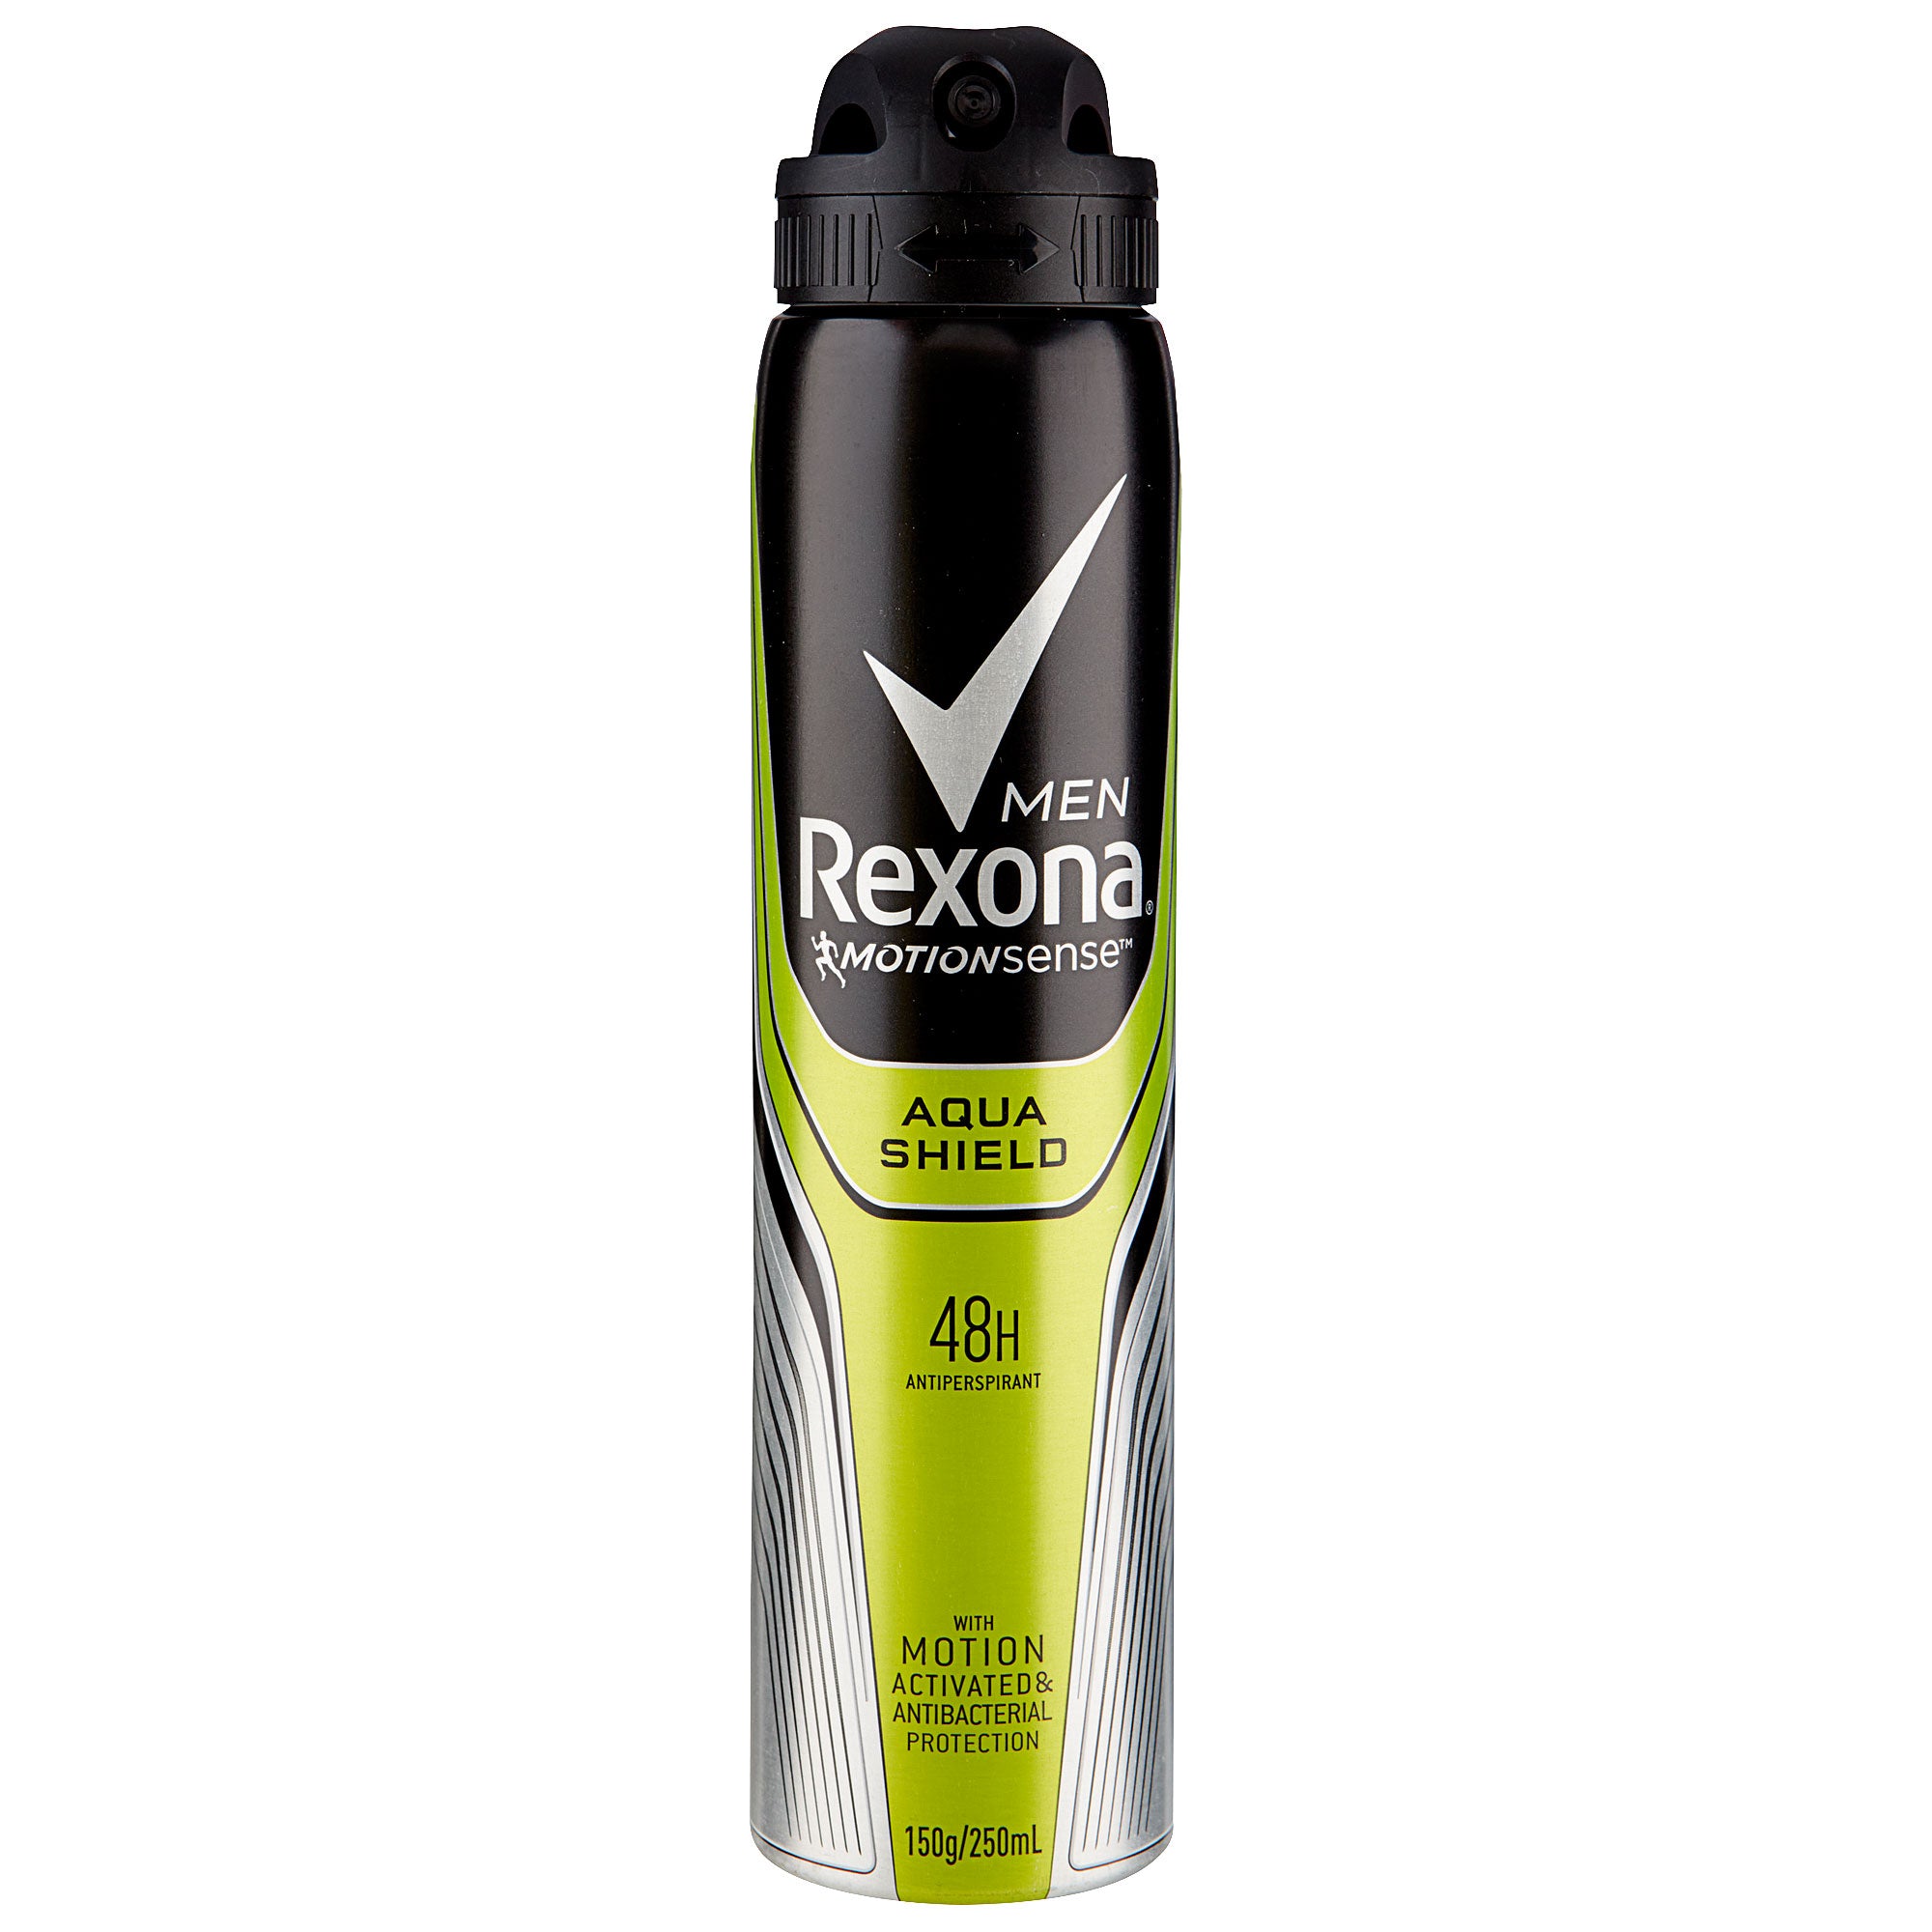 Rexona Men Antiperspirant Deodorant Aqua-Shield 150g/250mL – The Reject ...